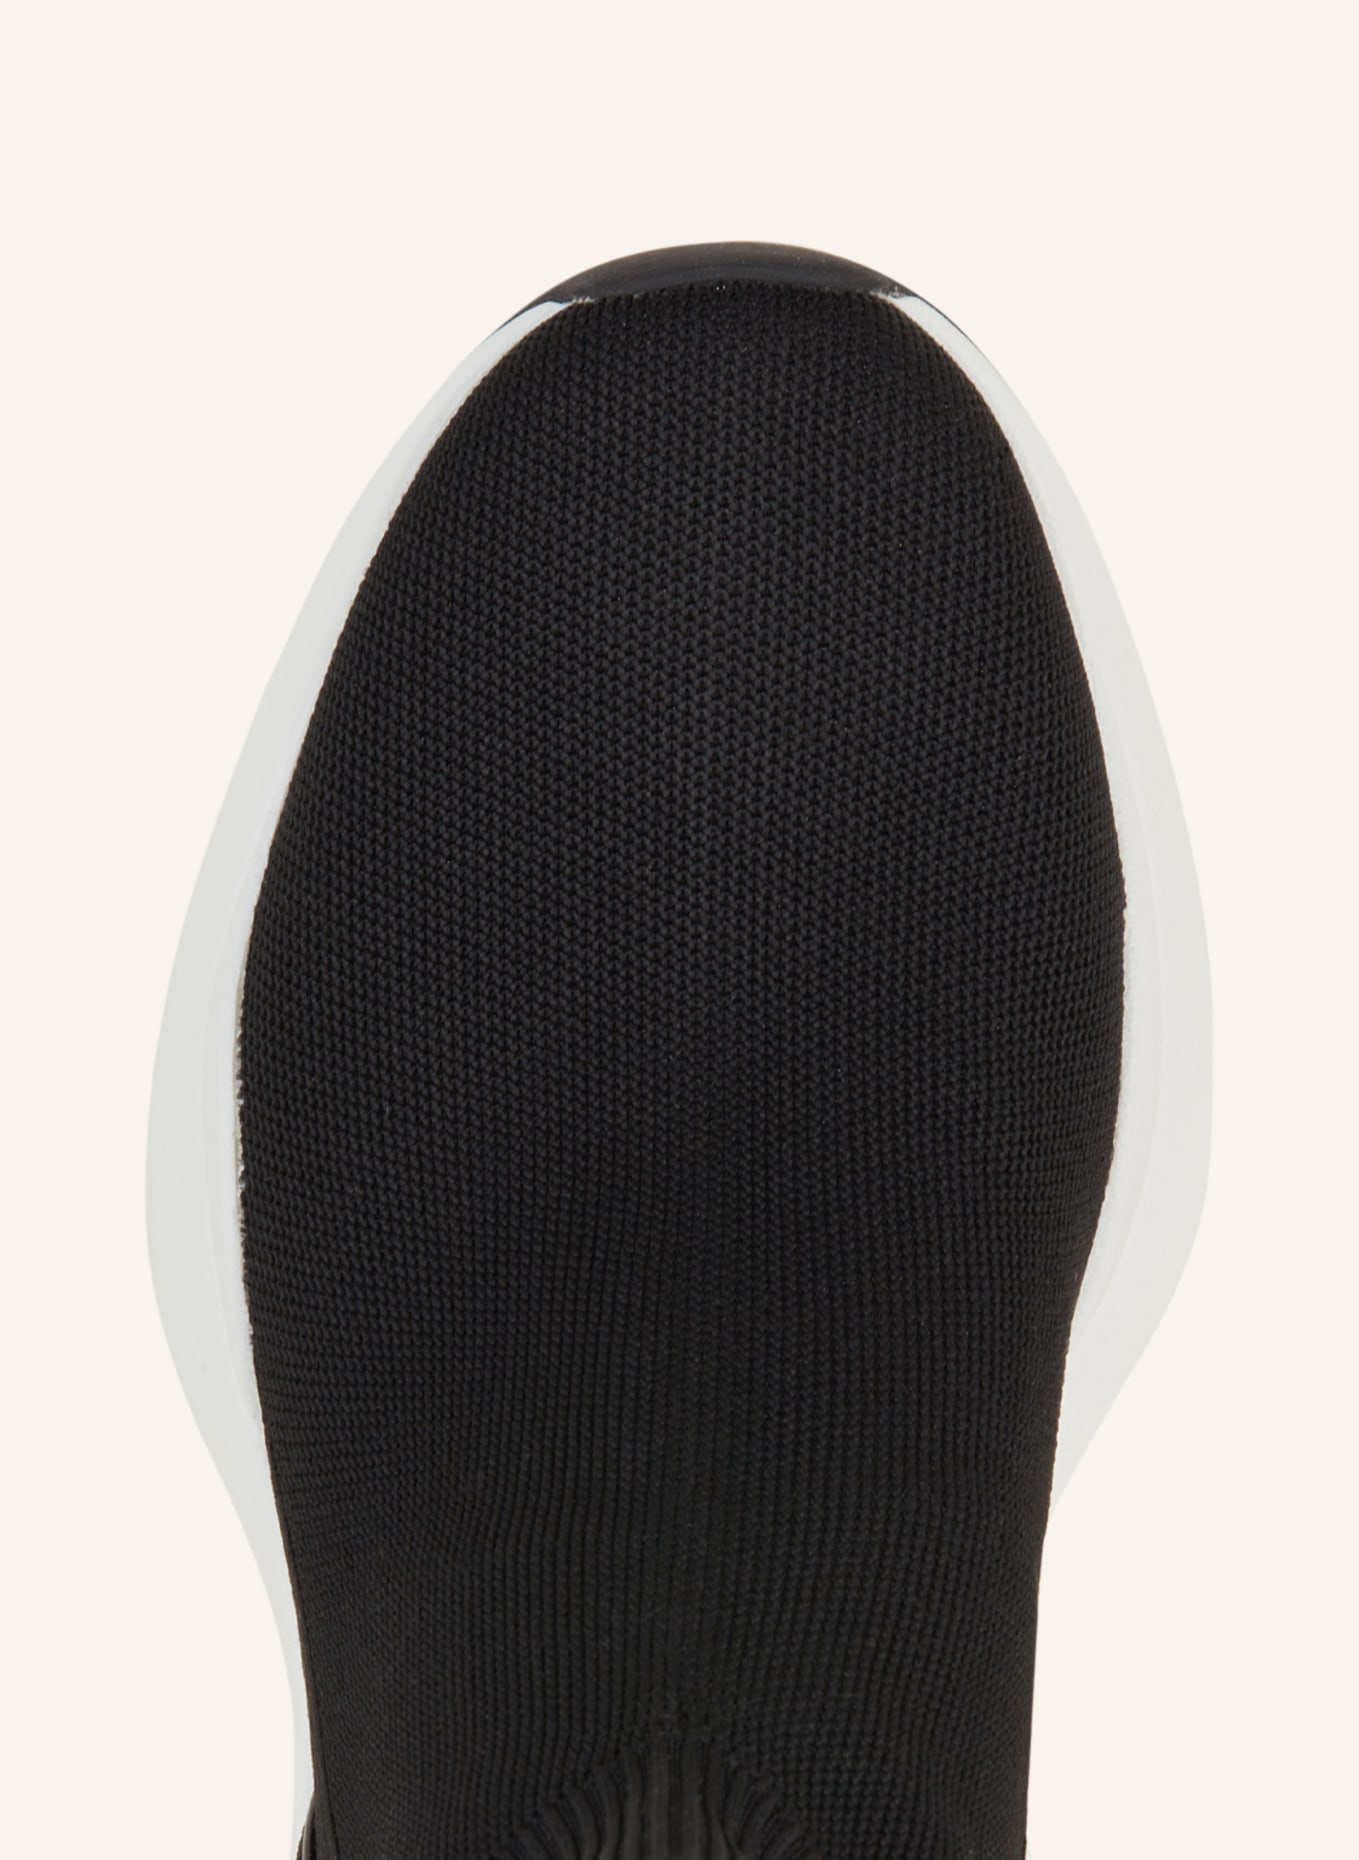 MICHAEL KORS Hightop-Sneaker, Farbe: 001 BLACK LEATHER (Bild 5)